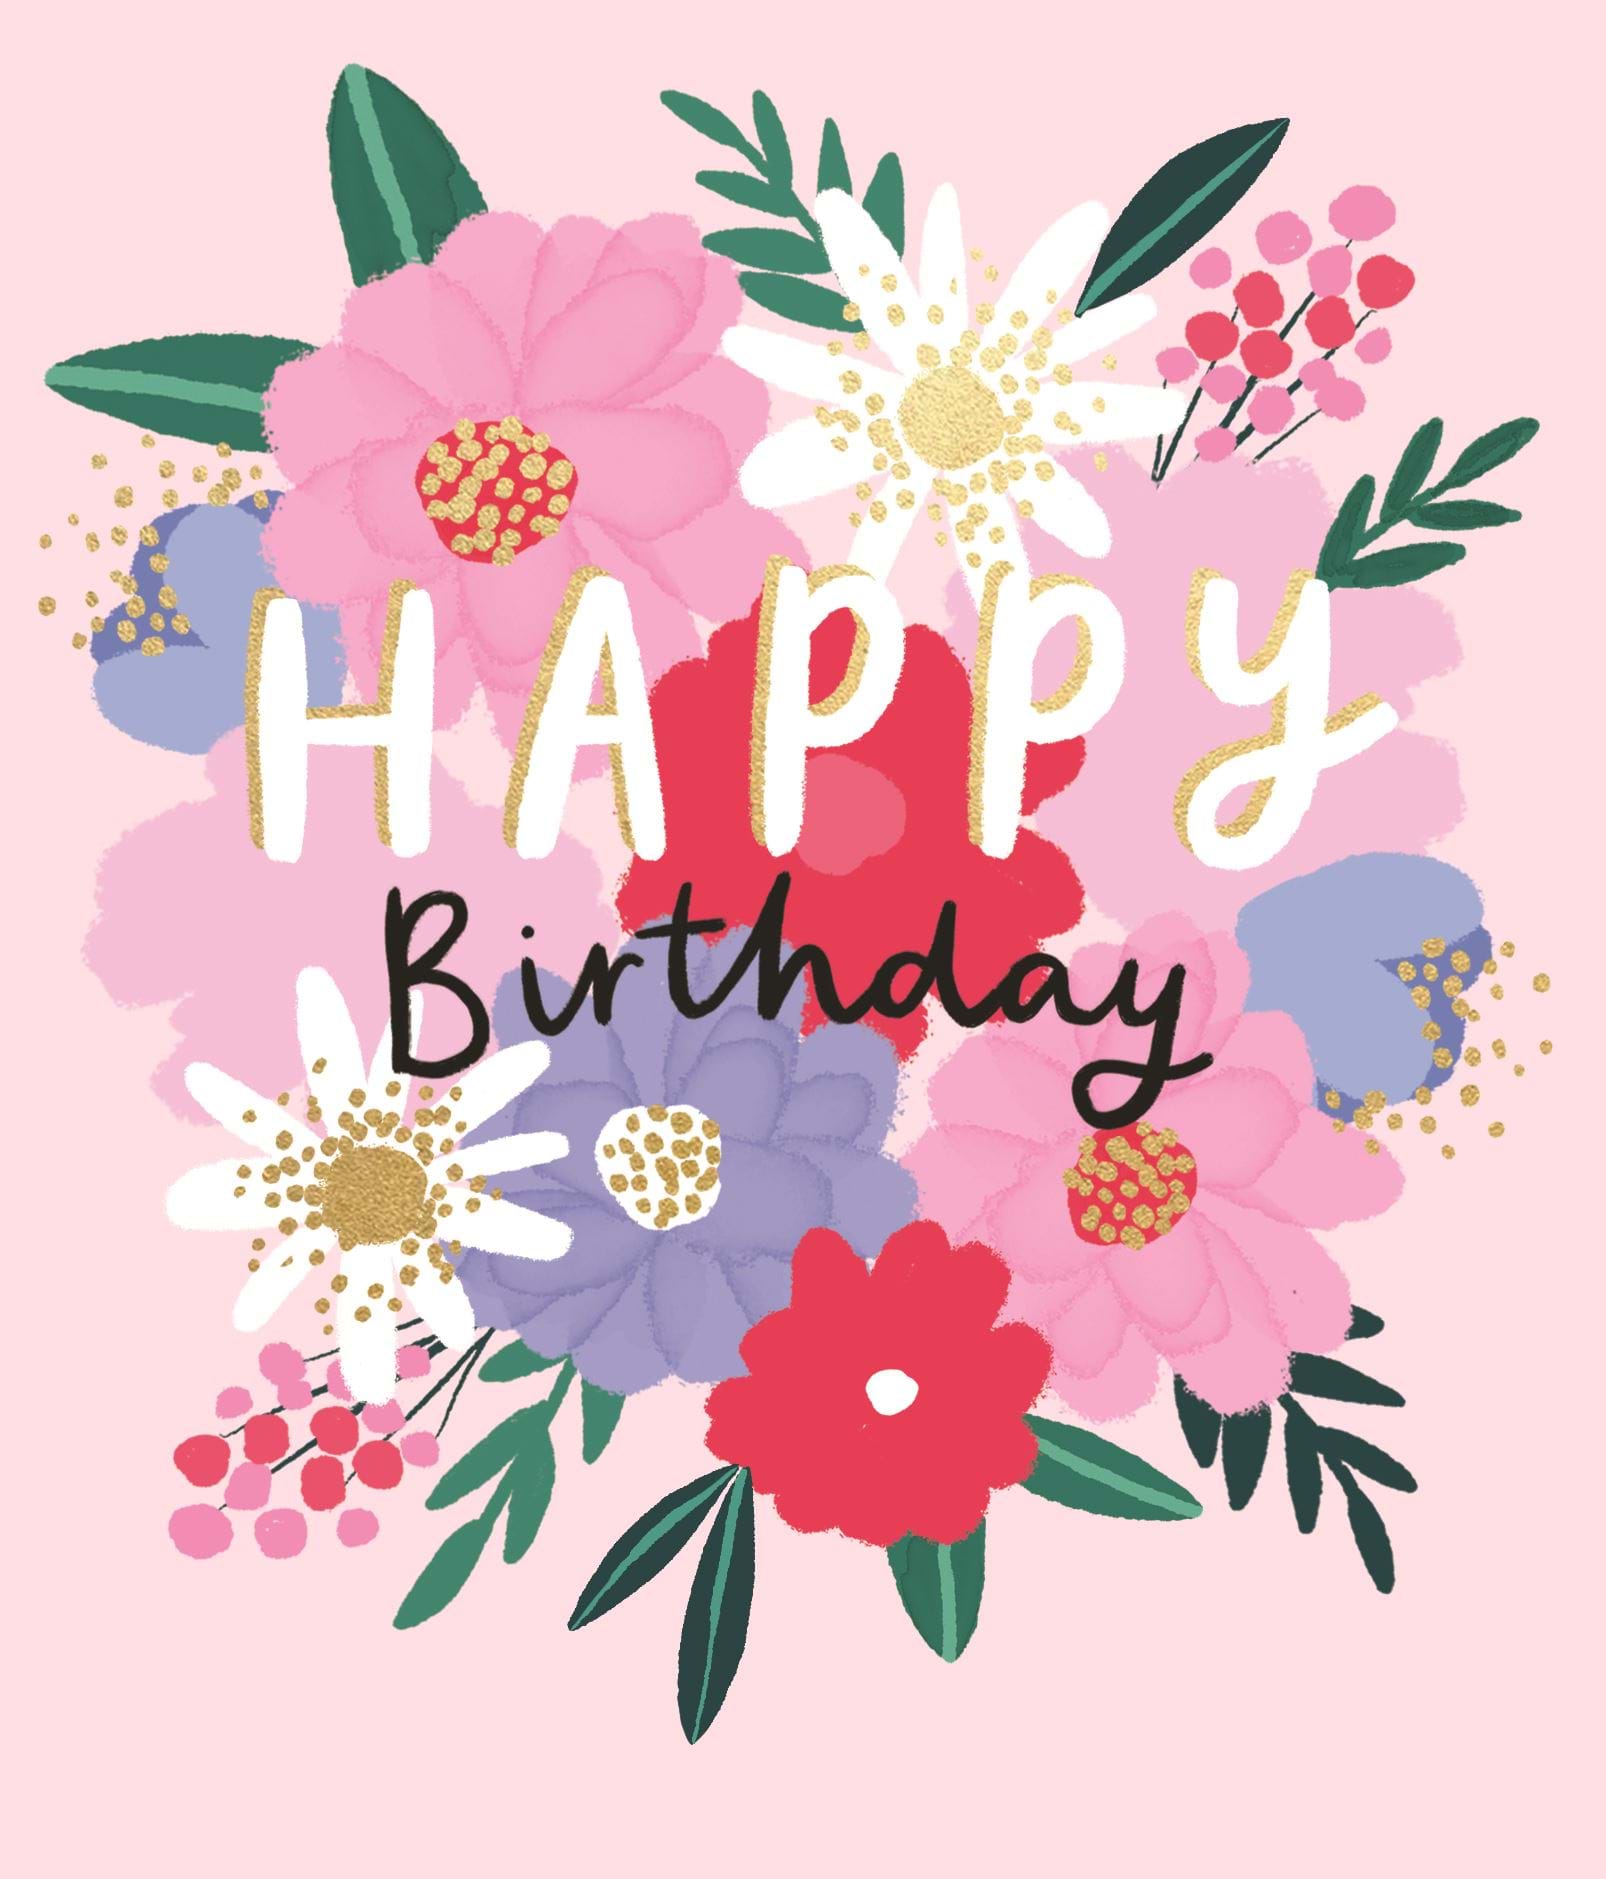 Type on Flowers Birthday Card